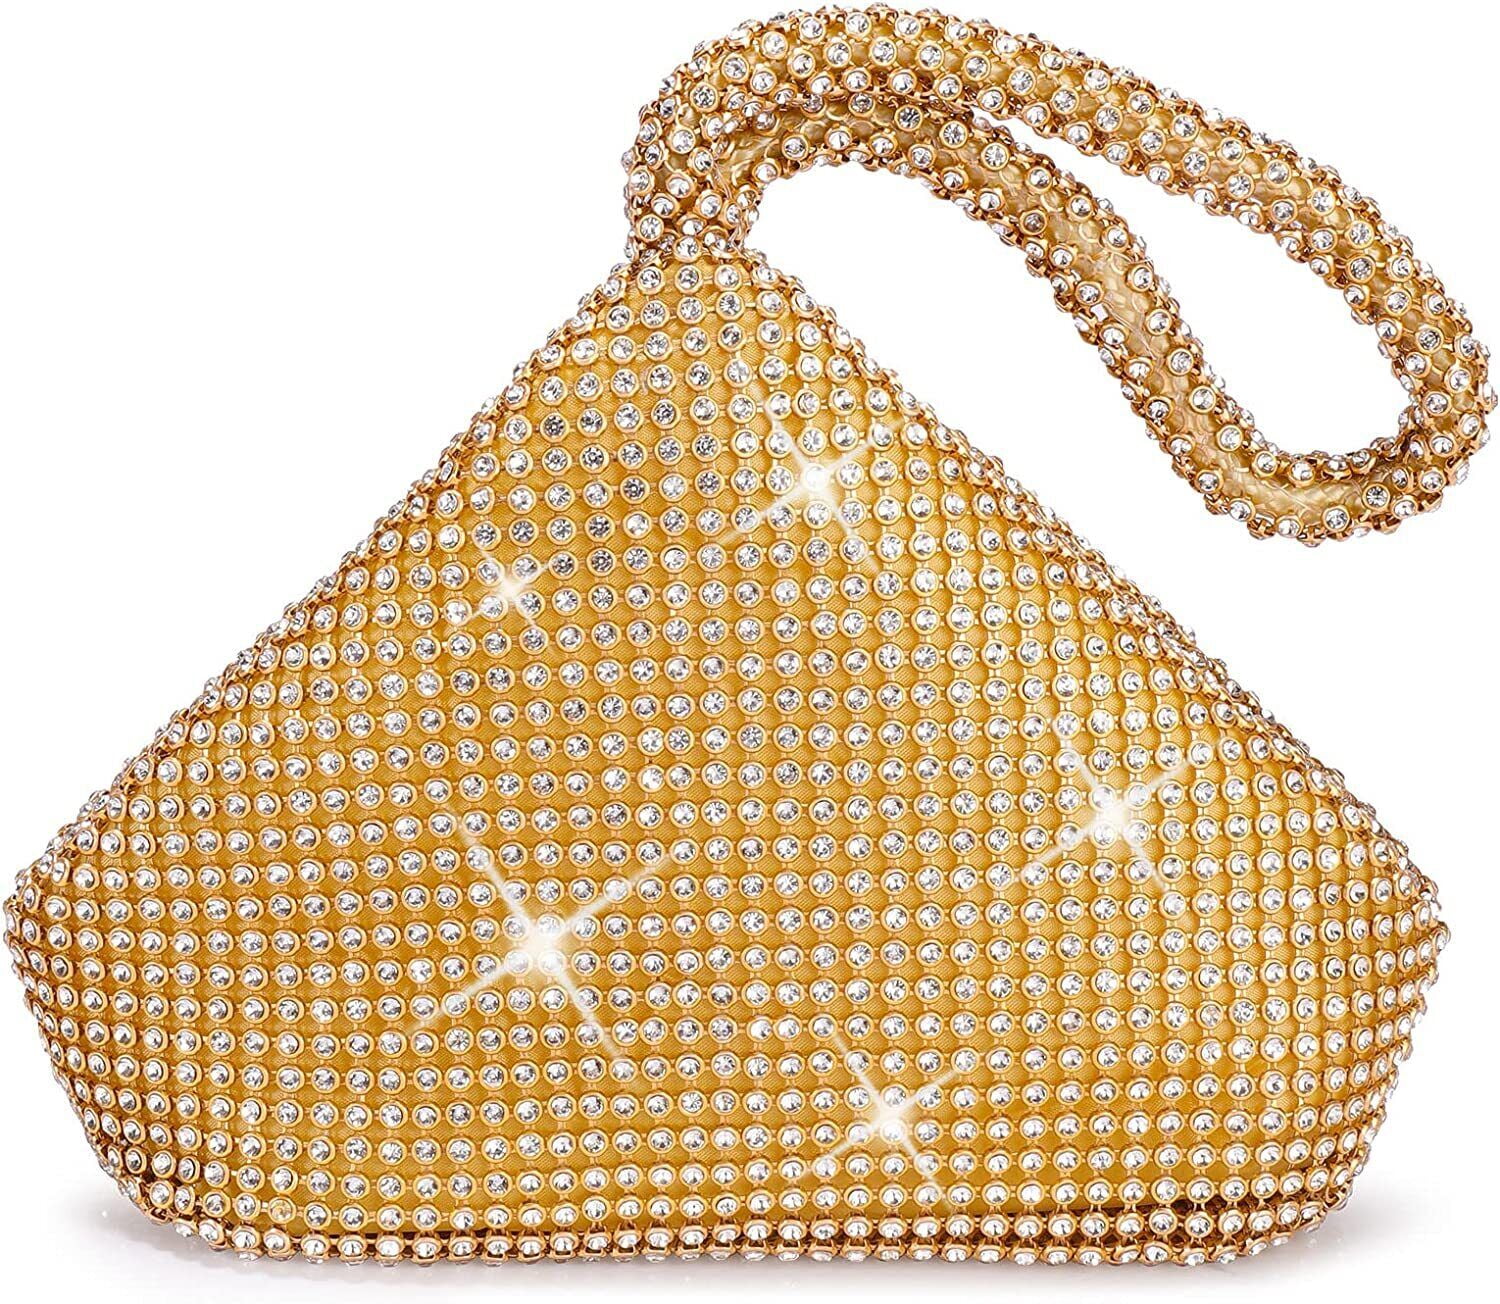 Designer Yellow Rhinestone Diamond Evening Clutch Bag Fashion Gold